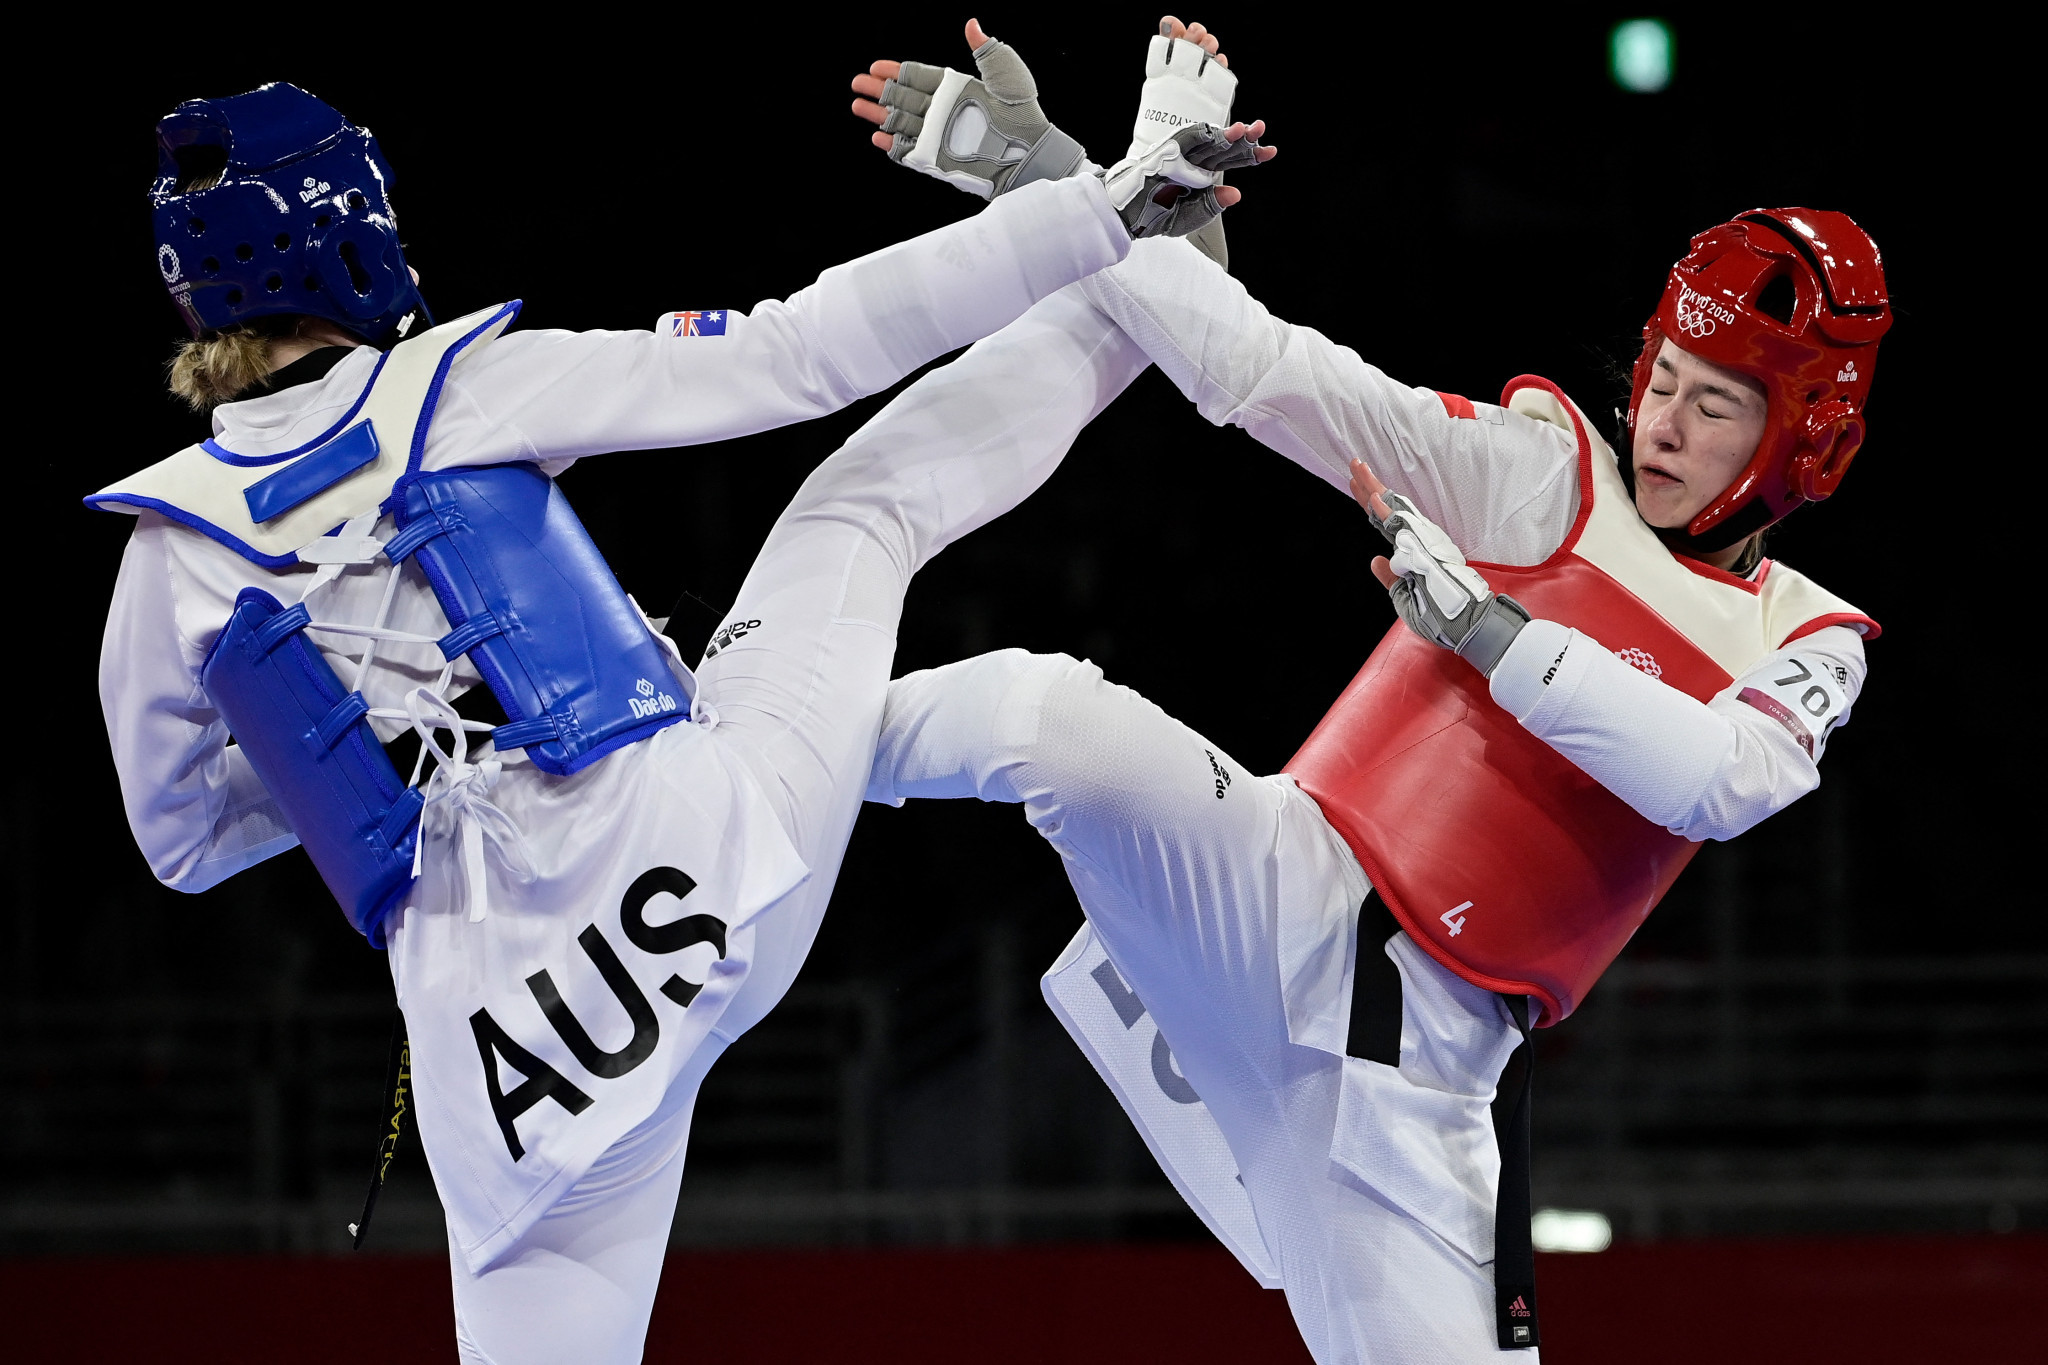 Award-winning taekwondo coach brings sport to autistic athletes in Australia